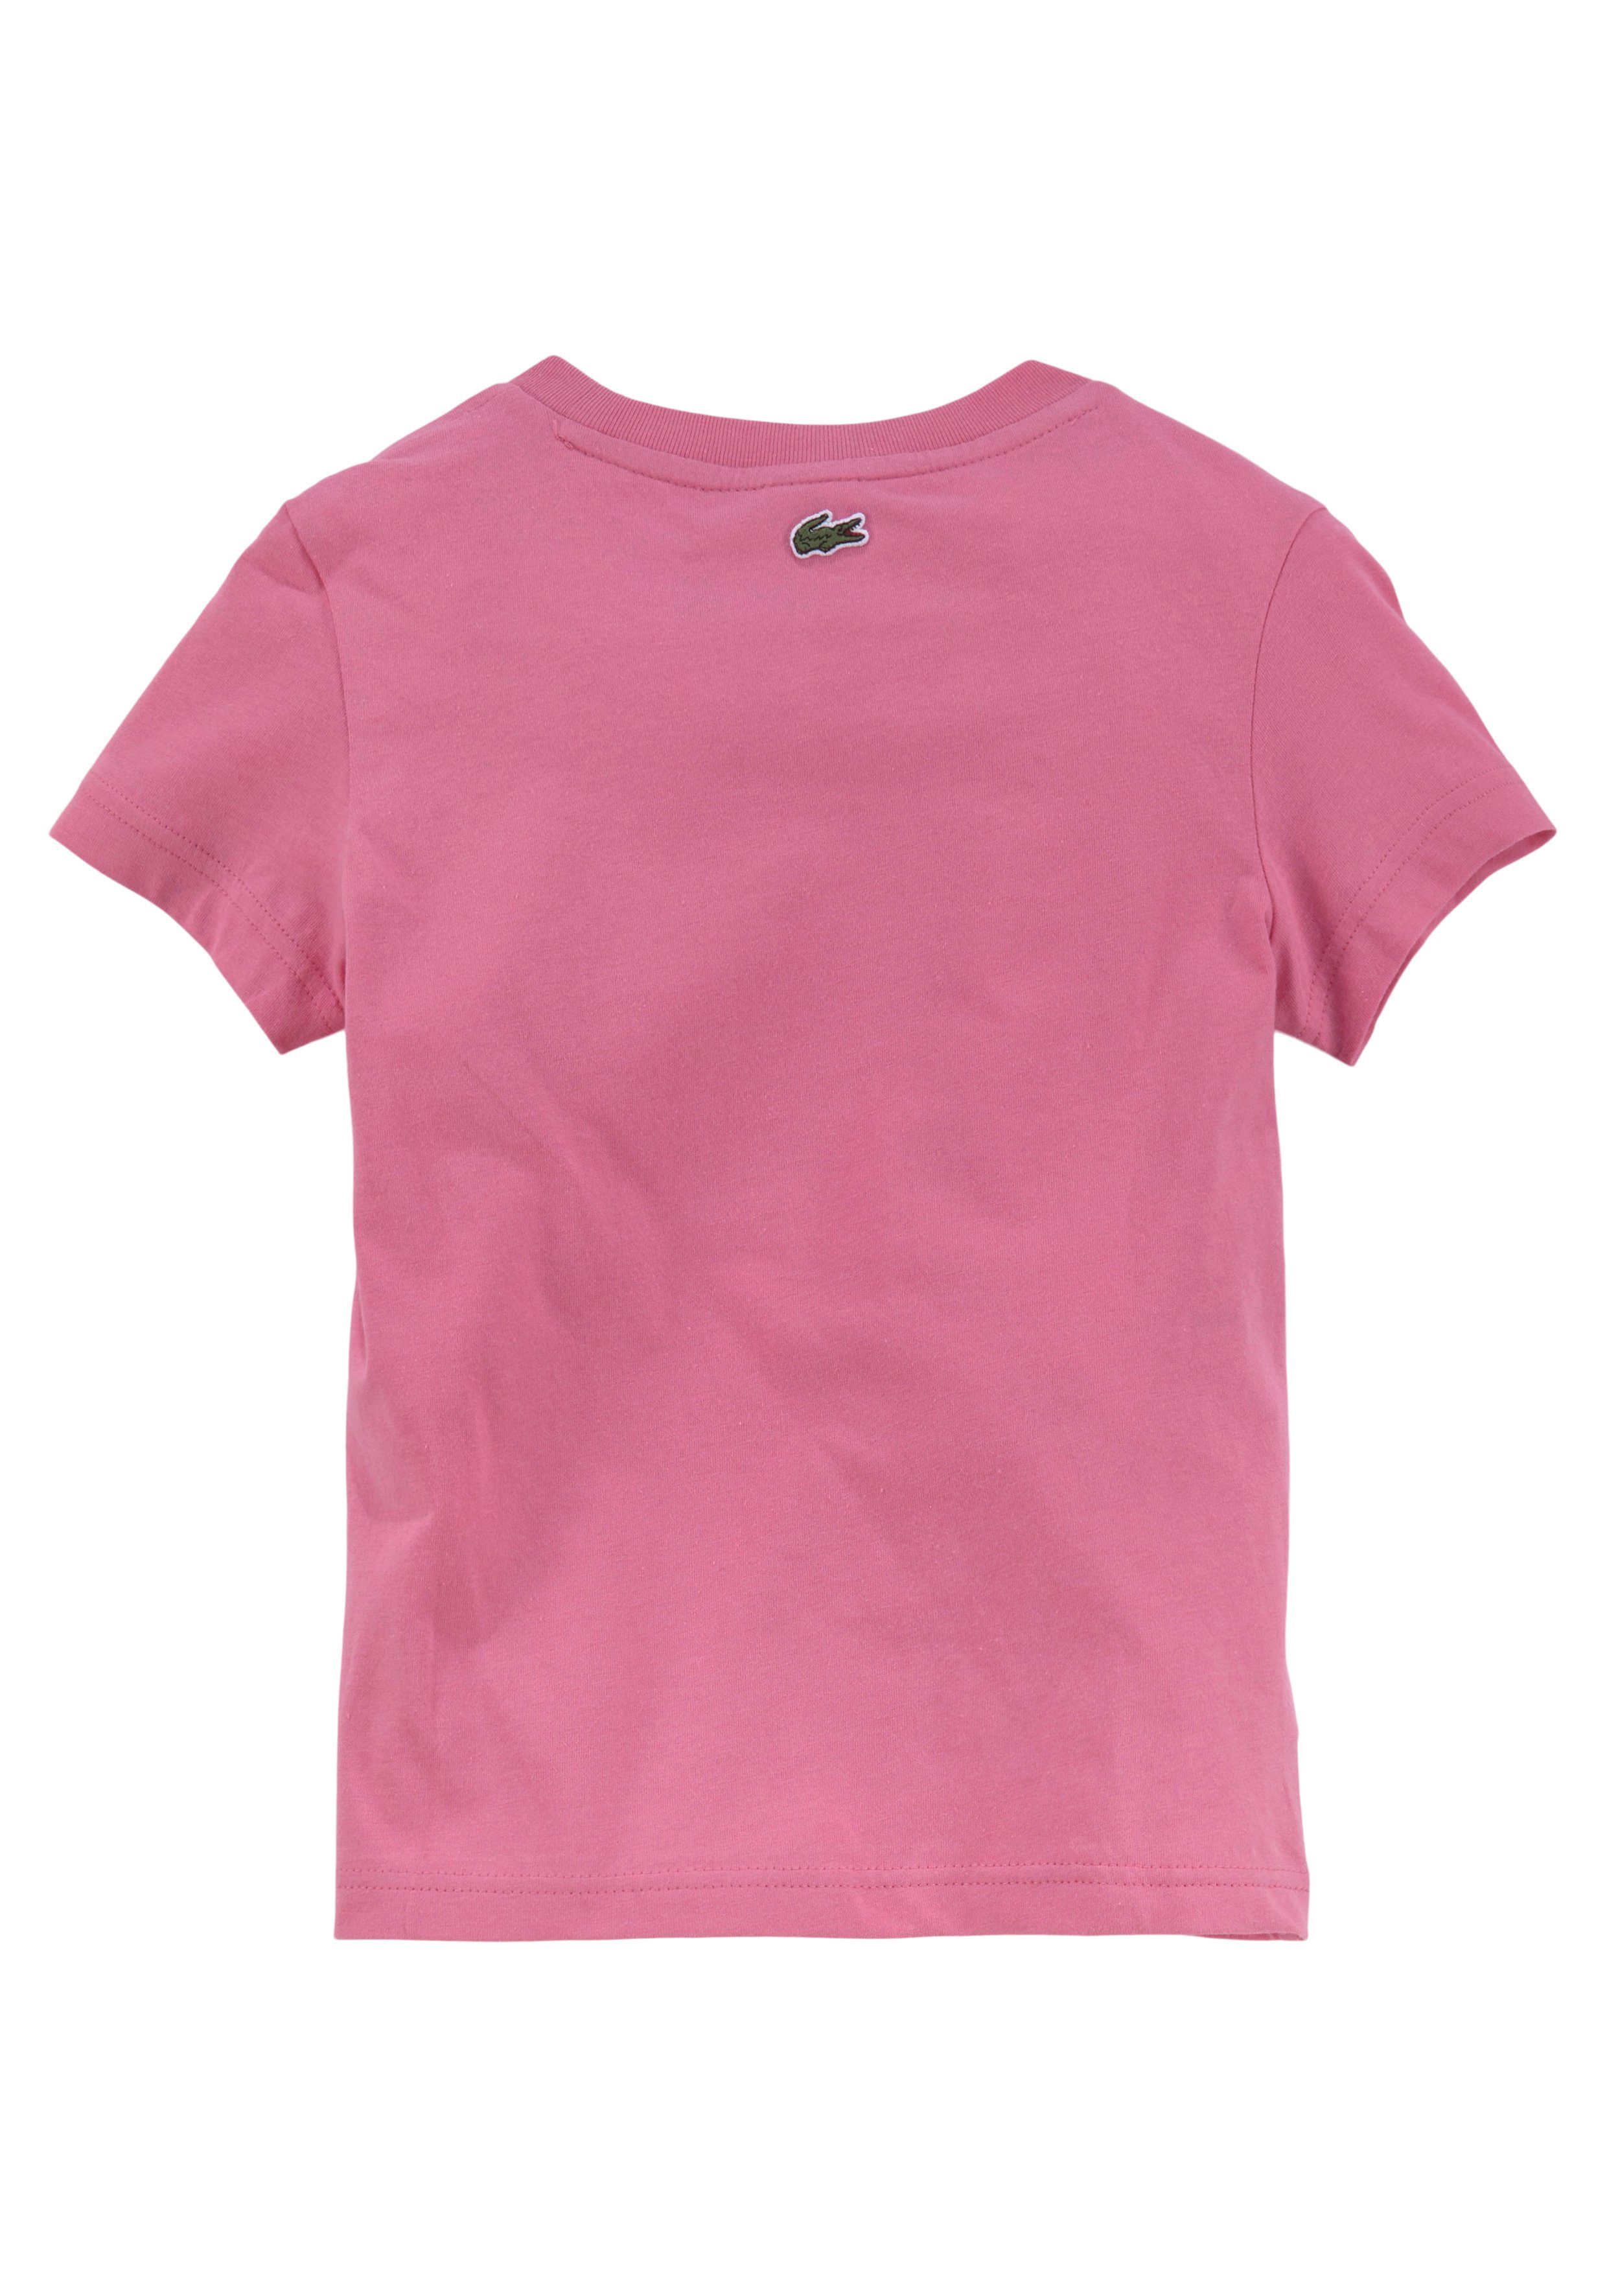 großem Logodruck mit reseda pink T-Shirt Lacoste